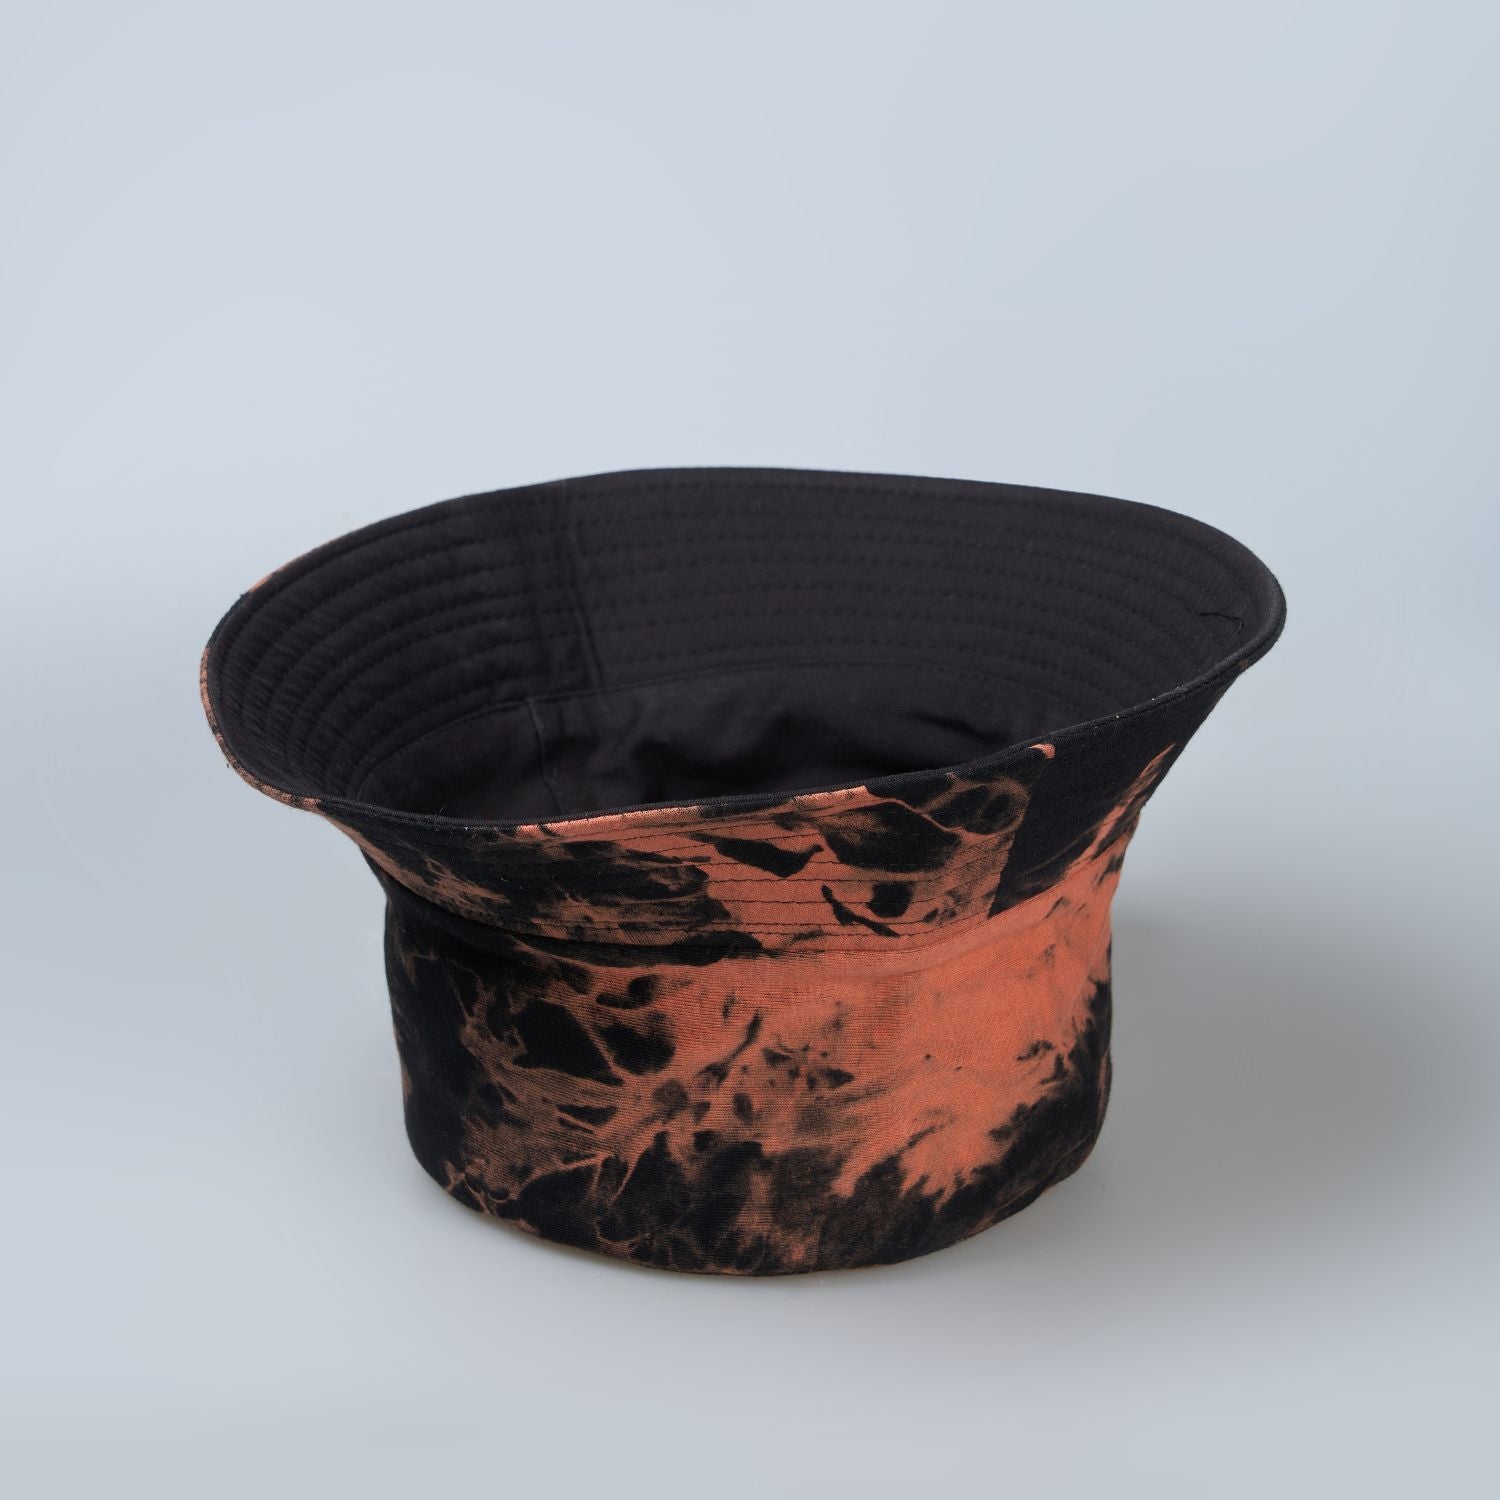 Black and orange colored, lightweight bucket hat for men, upside down.